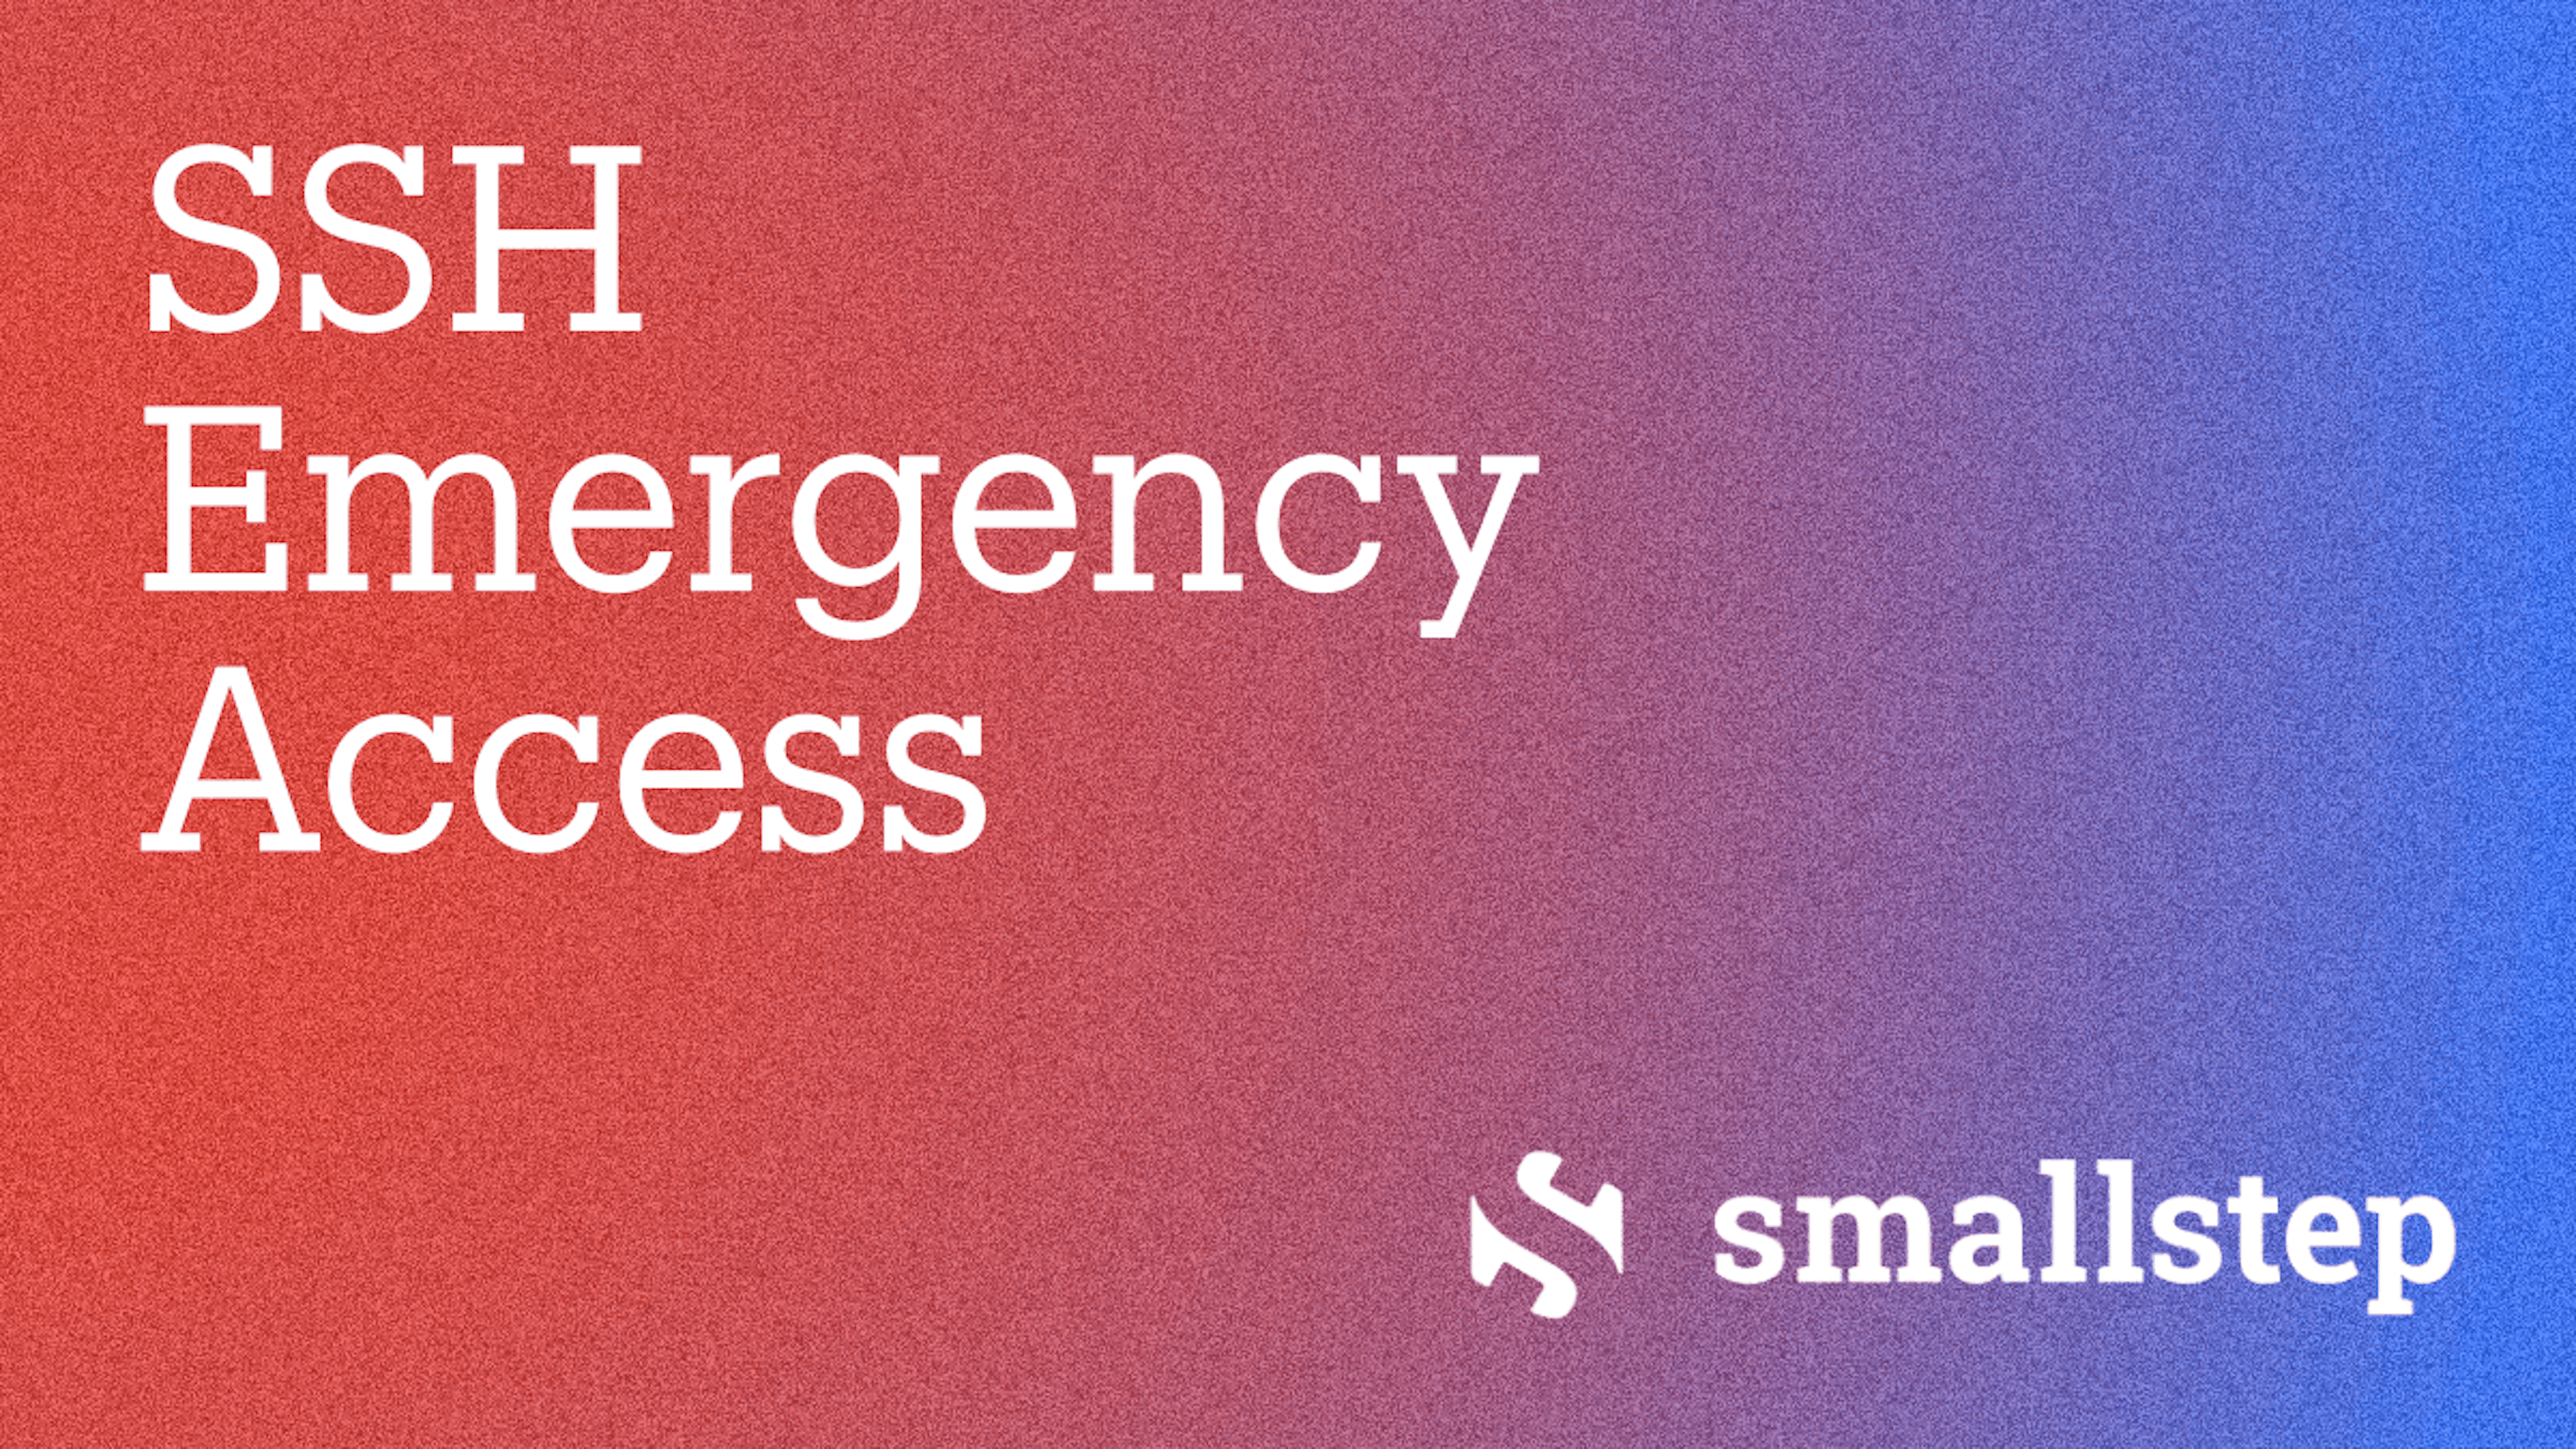 ssh-emergency-access-unfurl.png